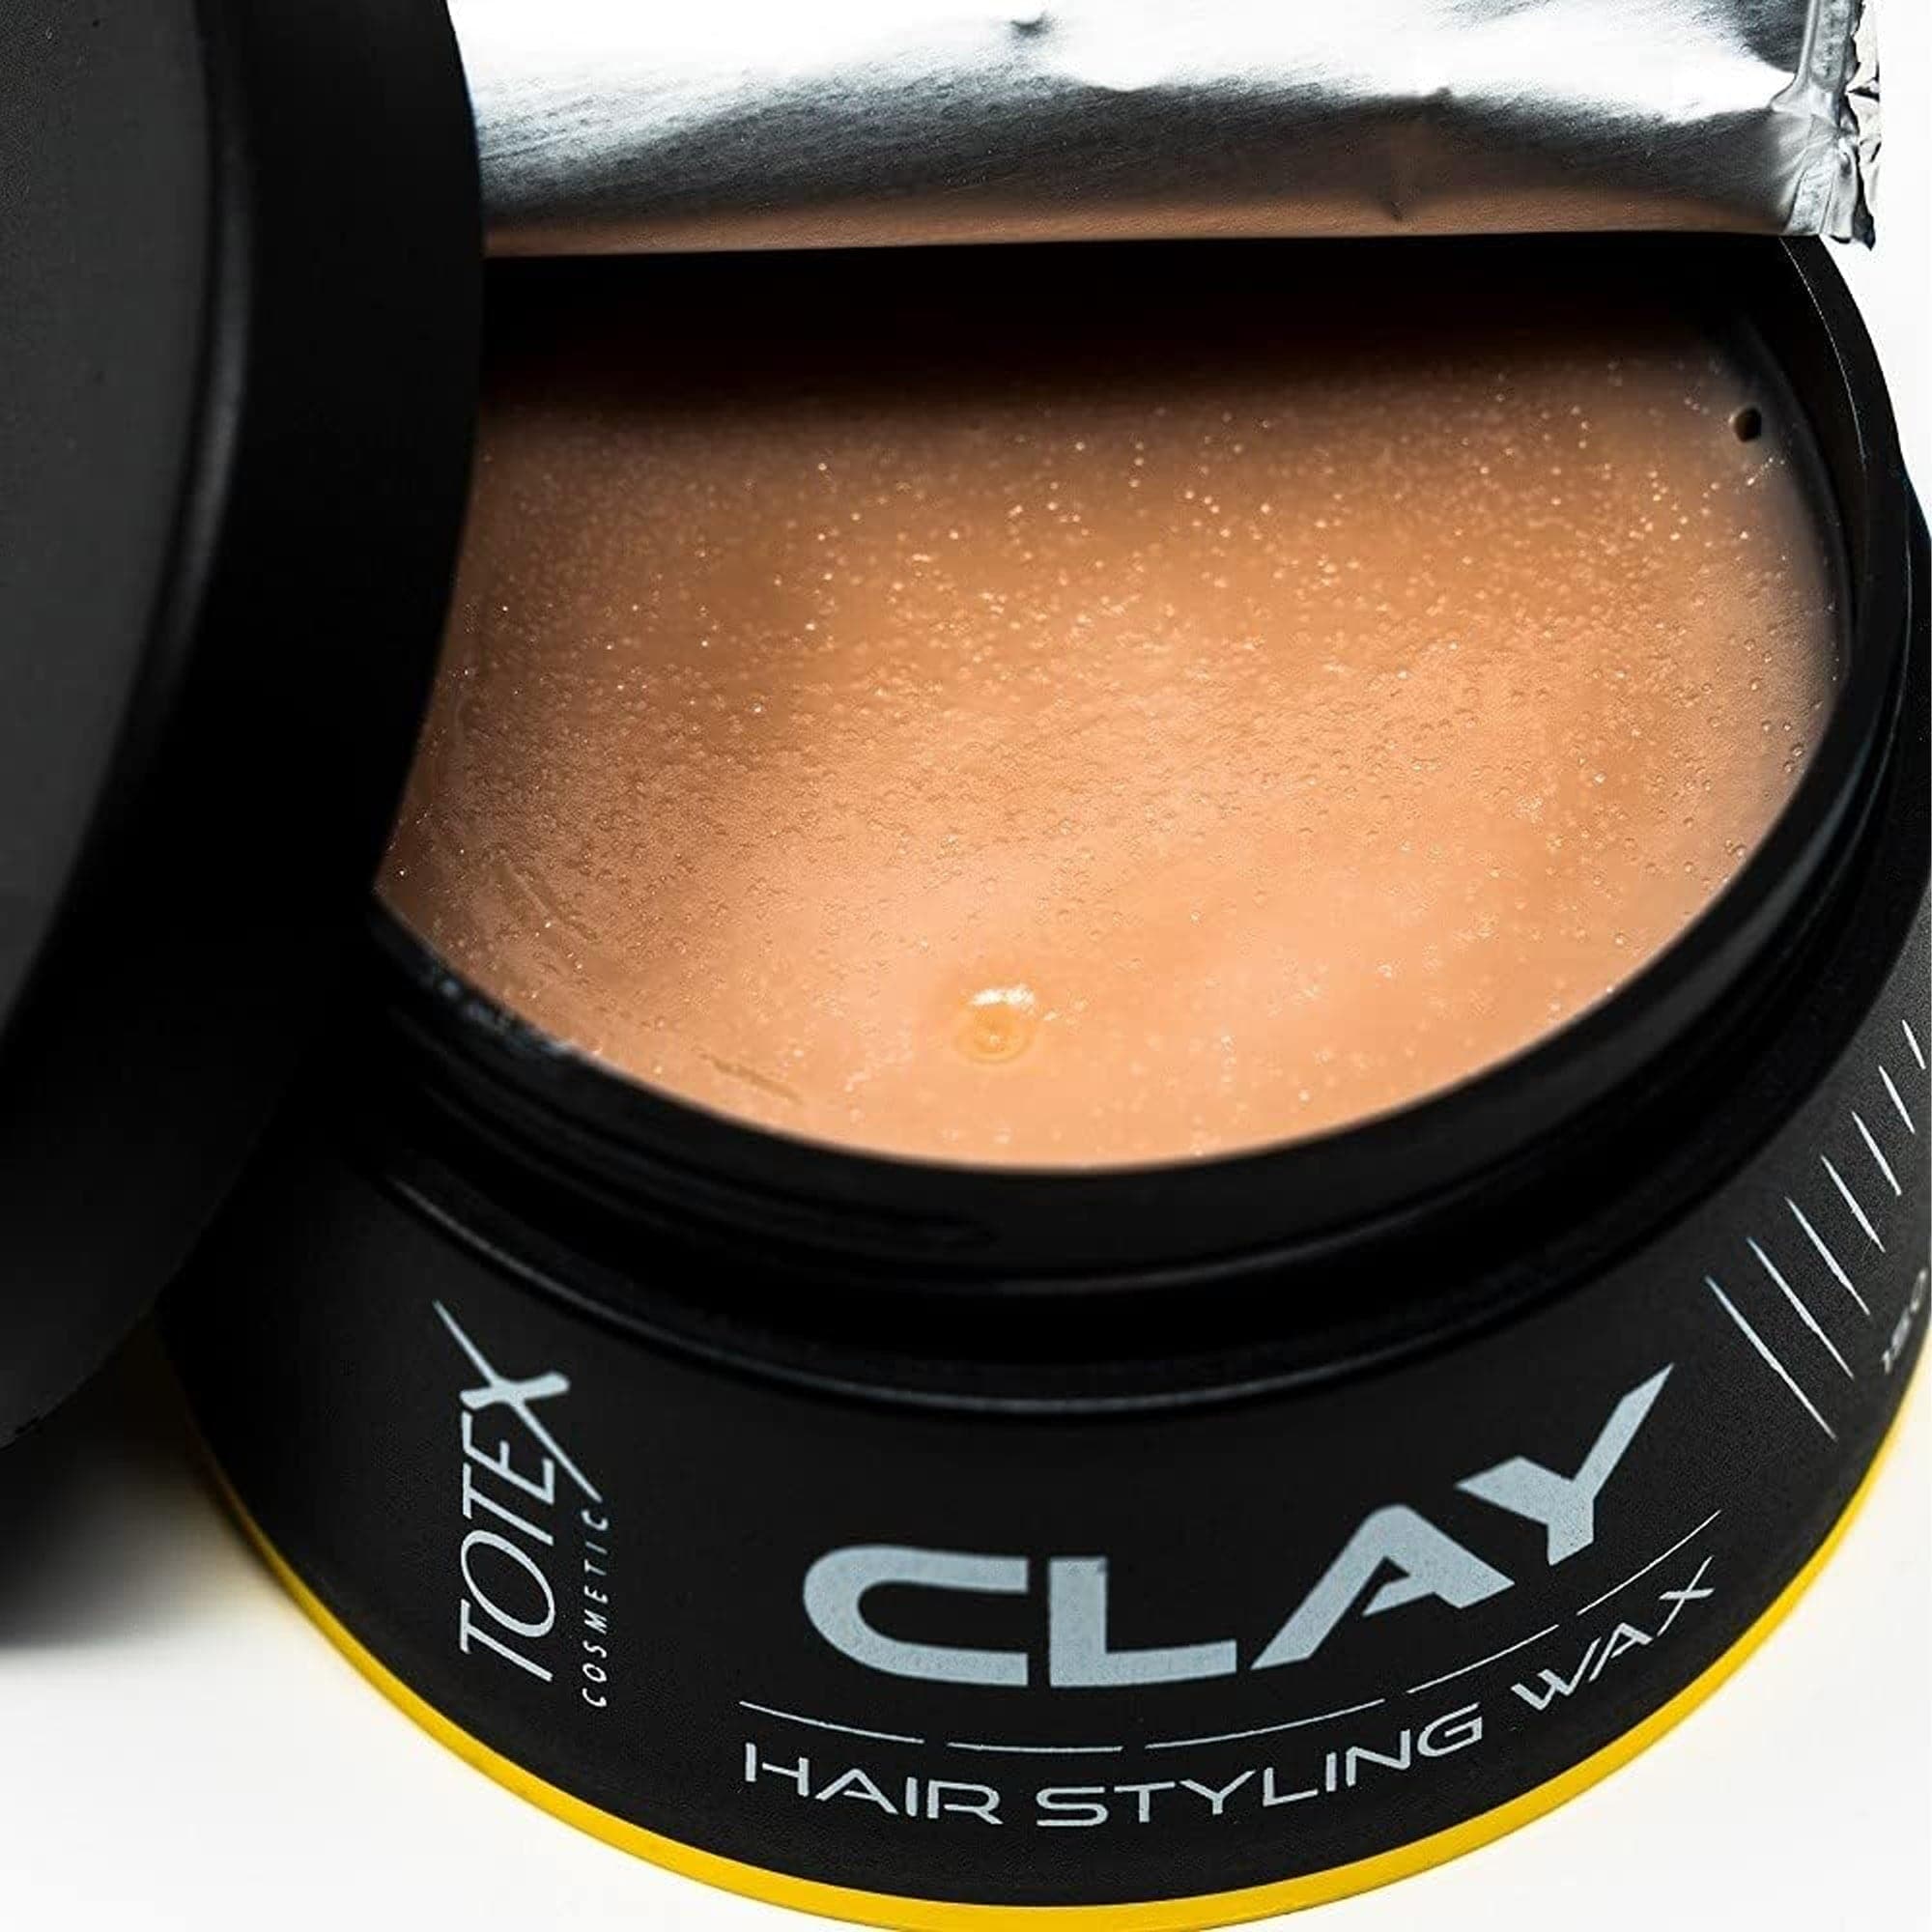 Totex - Hair Styling Wax Clay 150ml